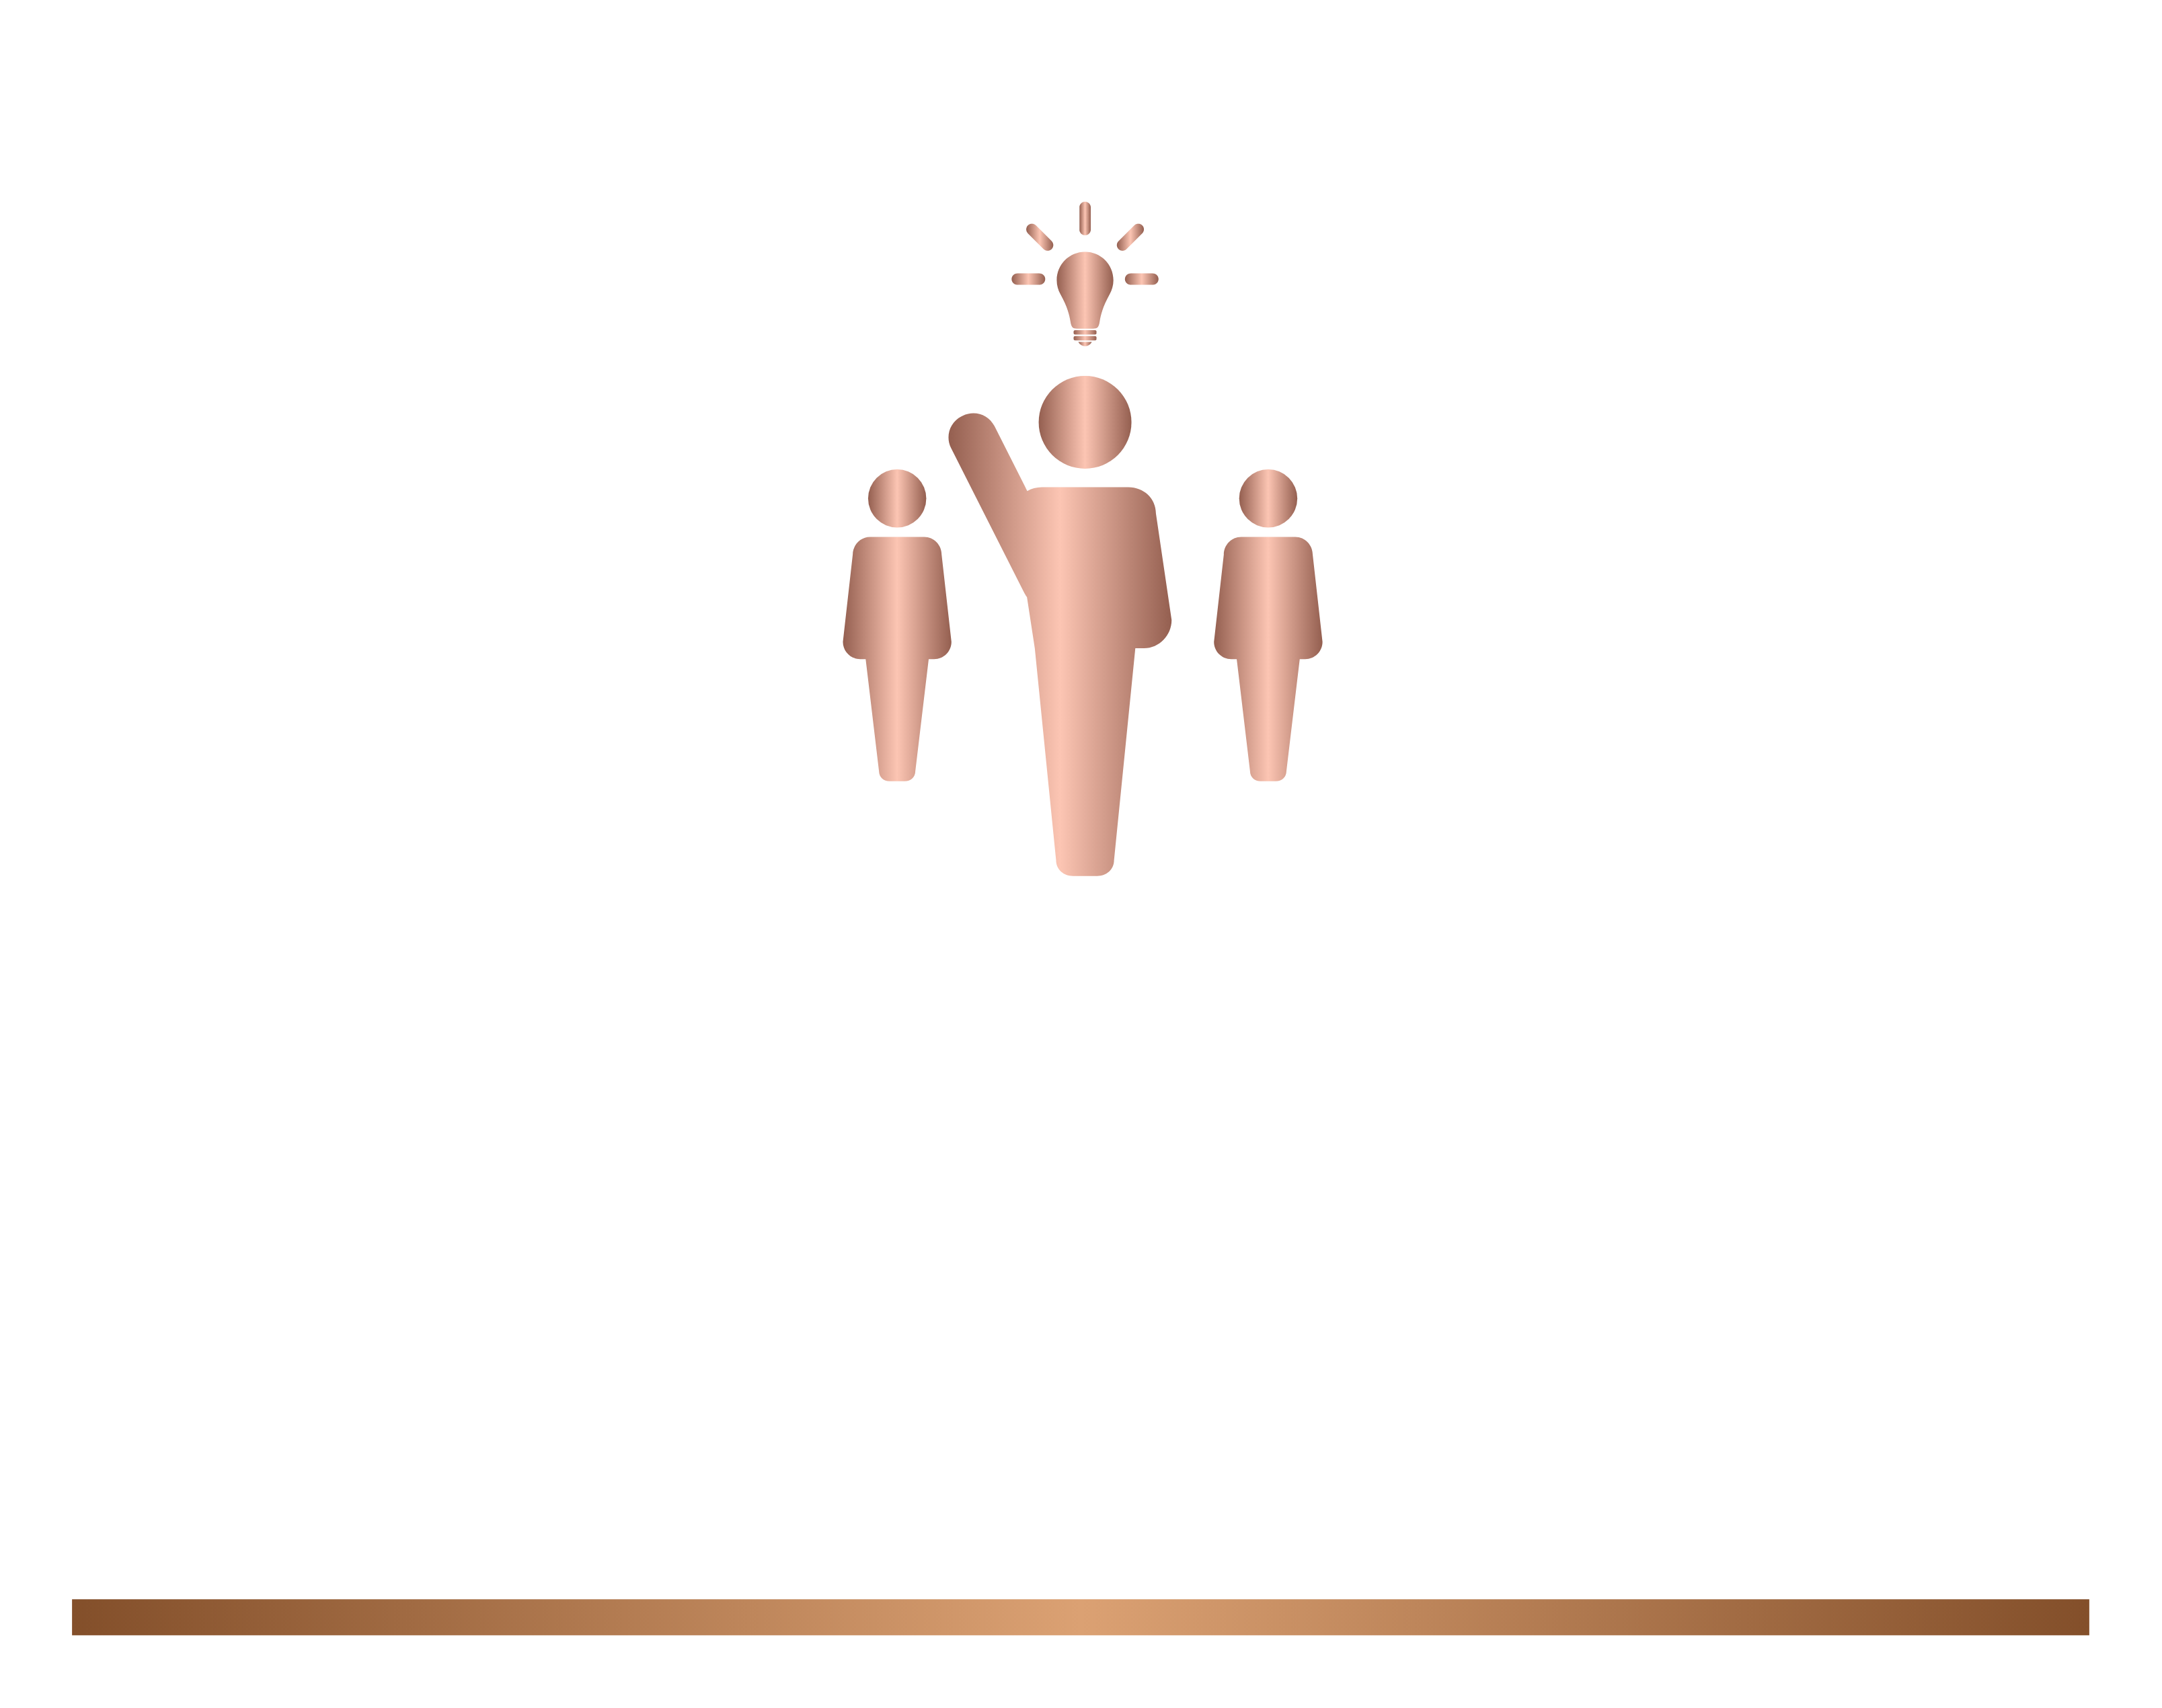 Prasad counseling logo